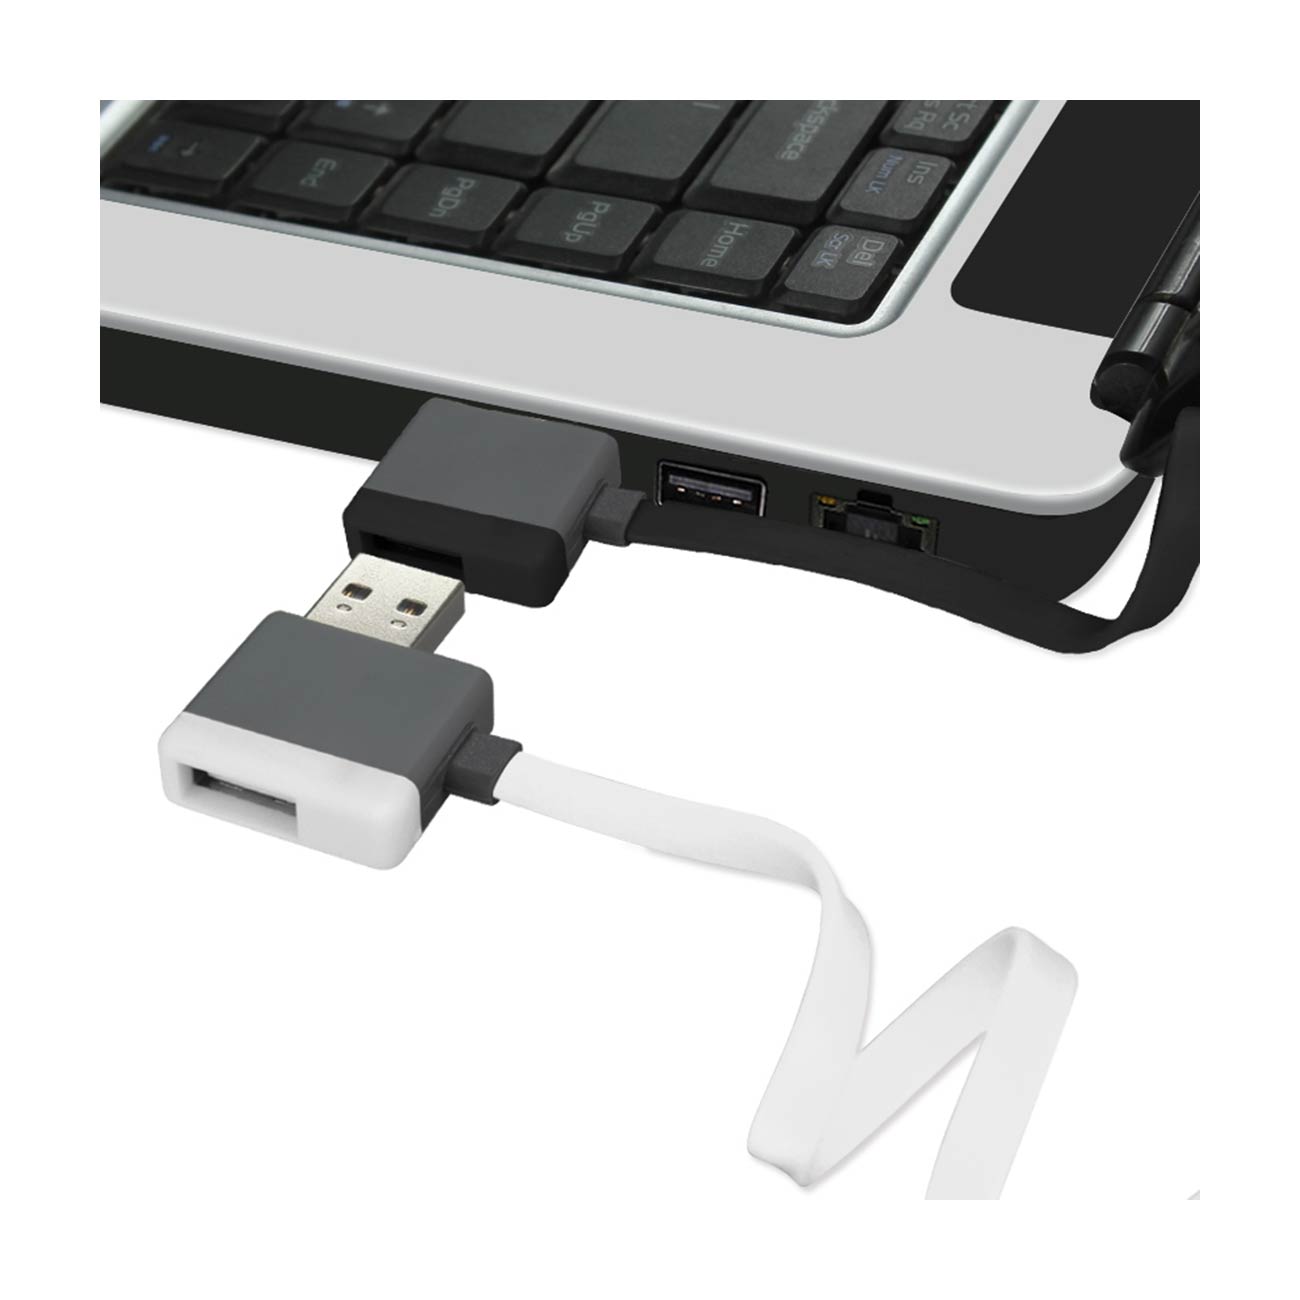 Cable USB Micro Piggyback Flat Liberator 3.2Ft Black Color